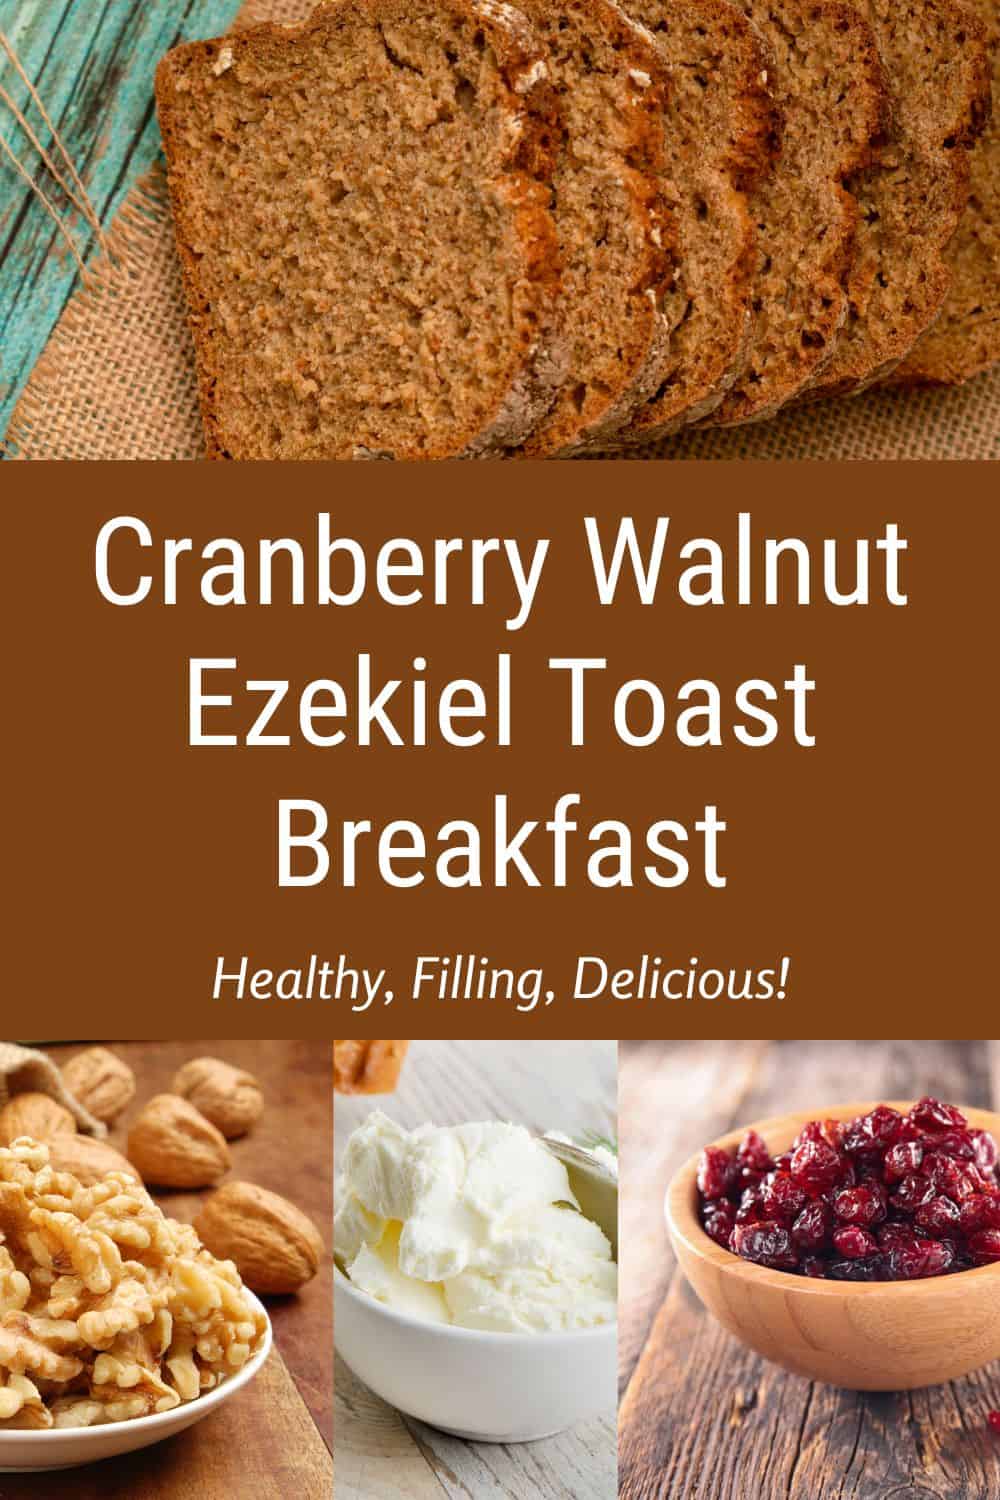 Cranberry Walnut Ezekiel Toast Breakfast